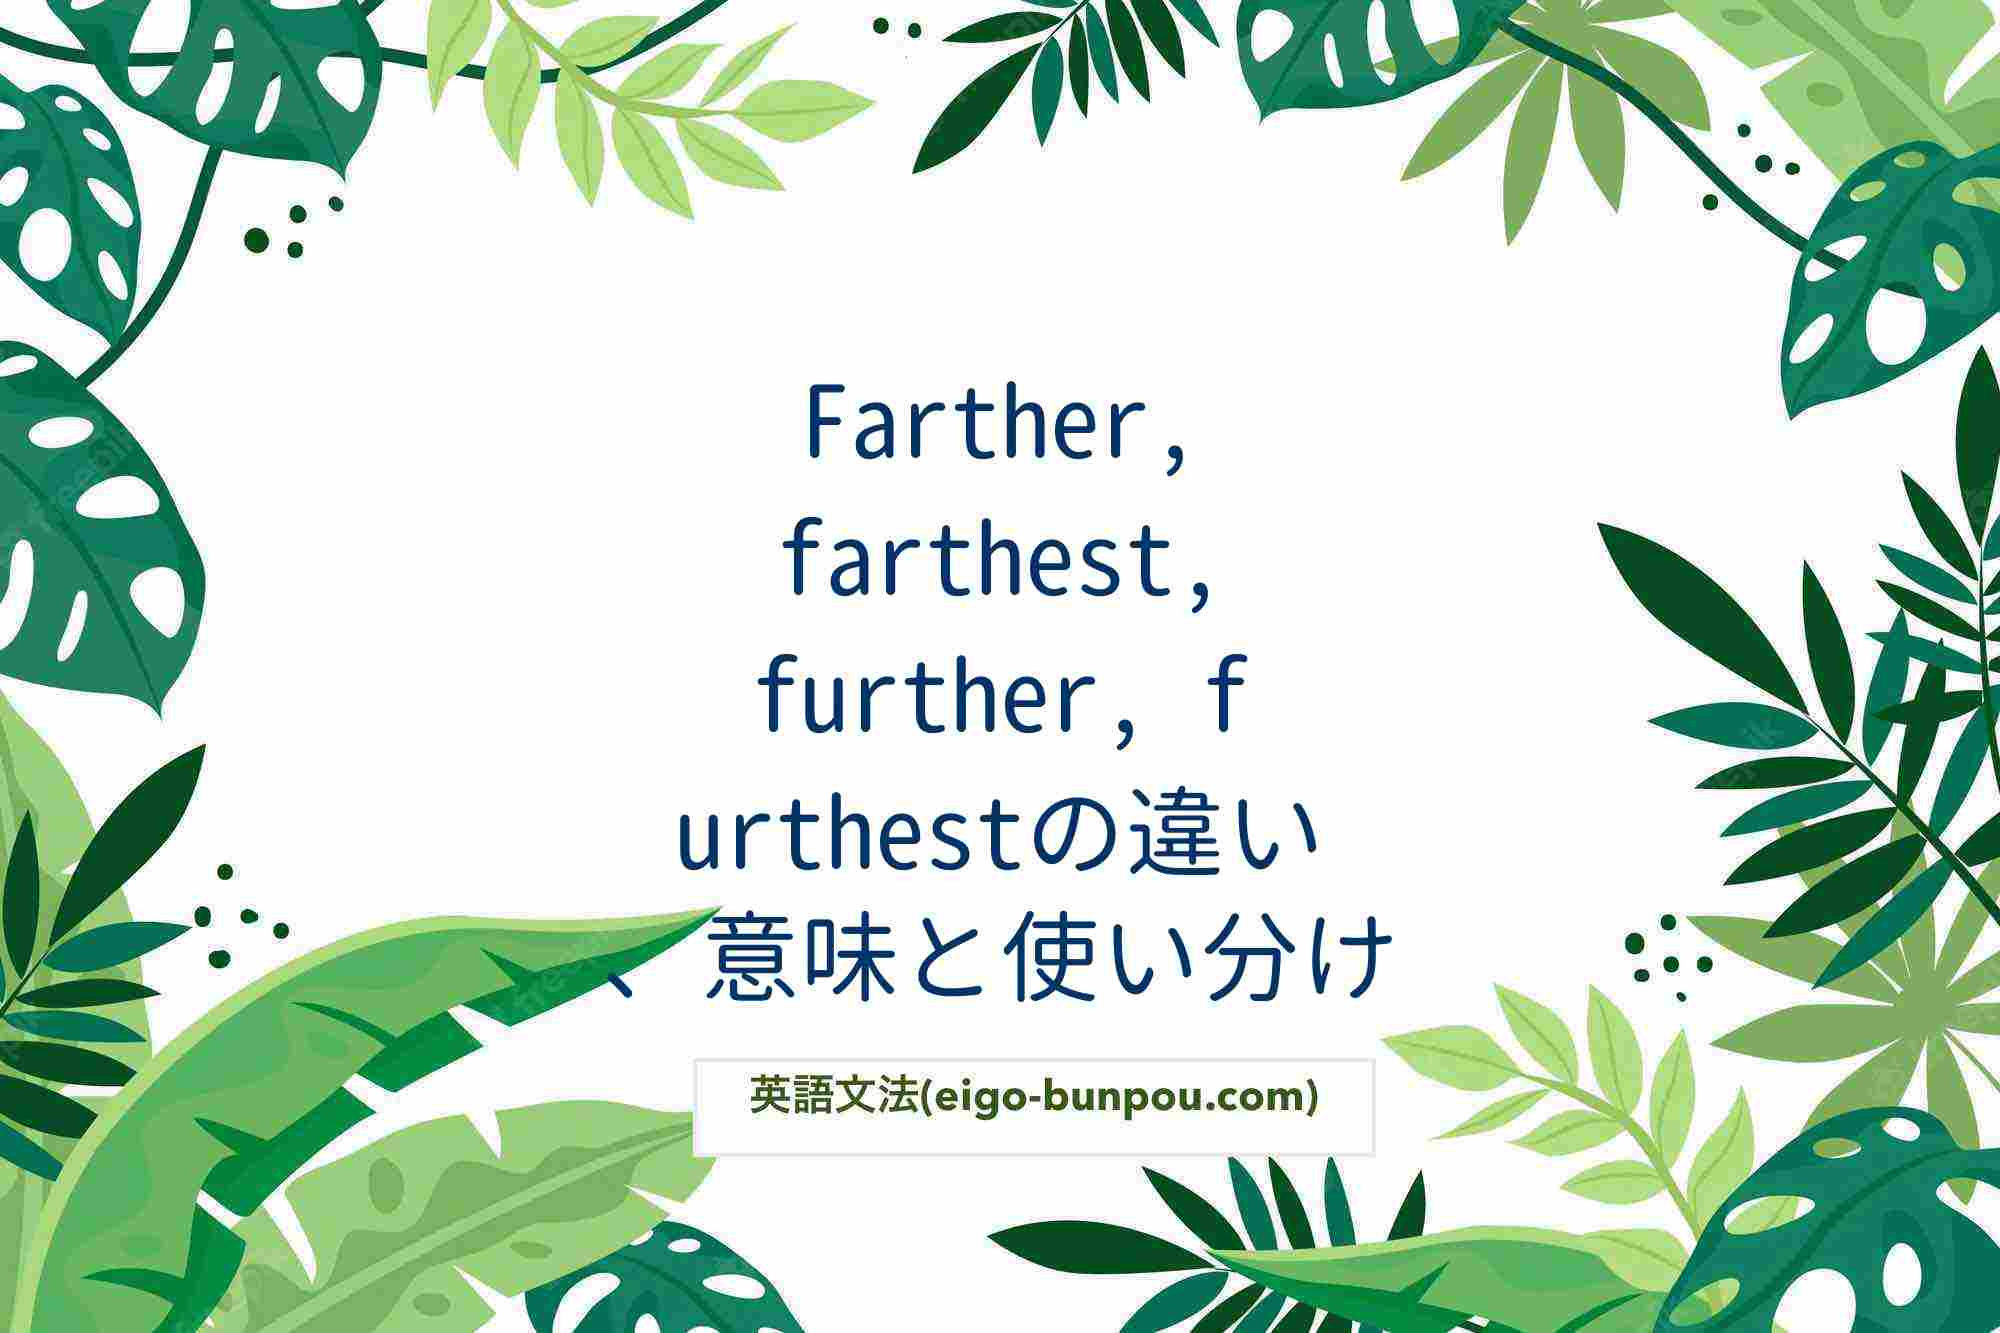 Farther, farthest, further, furthestの違い、意味と使い分け